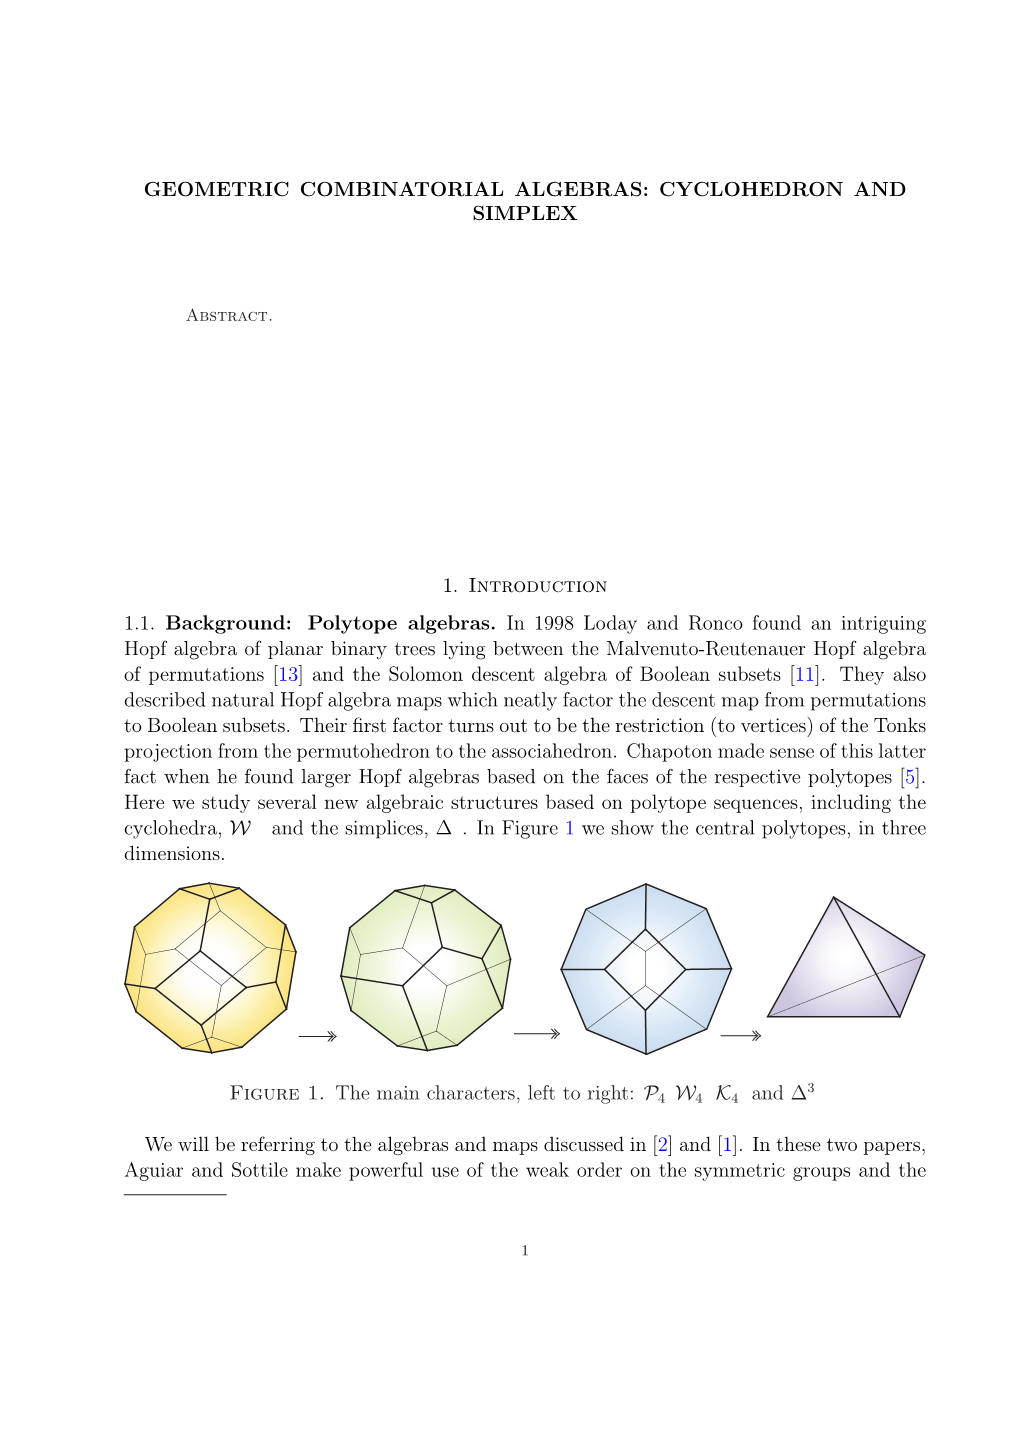 Geometric Combinatorial Algebras: Cyclohedron and Simplex